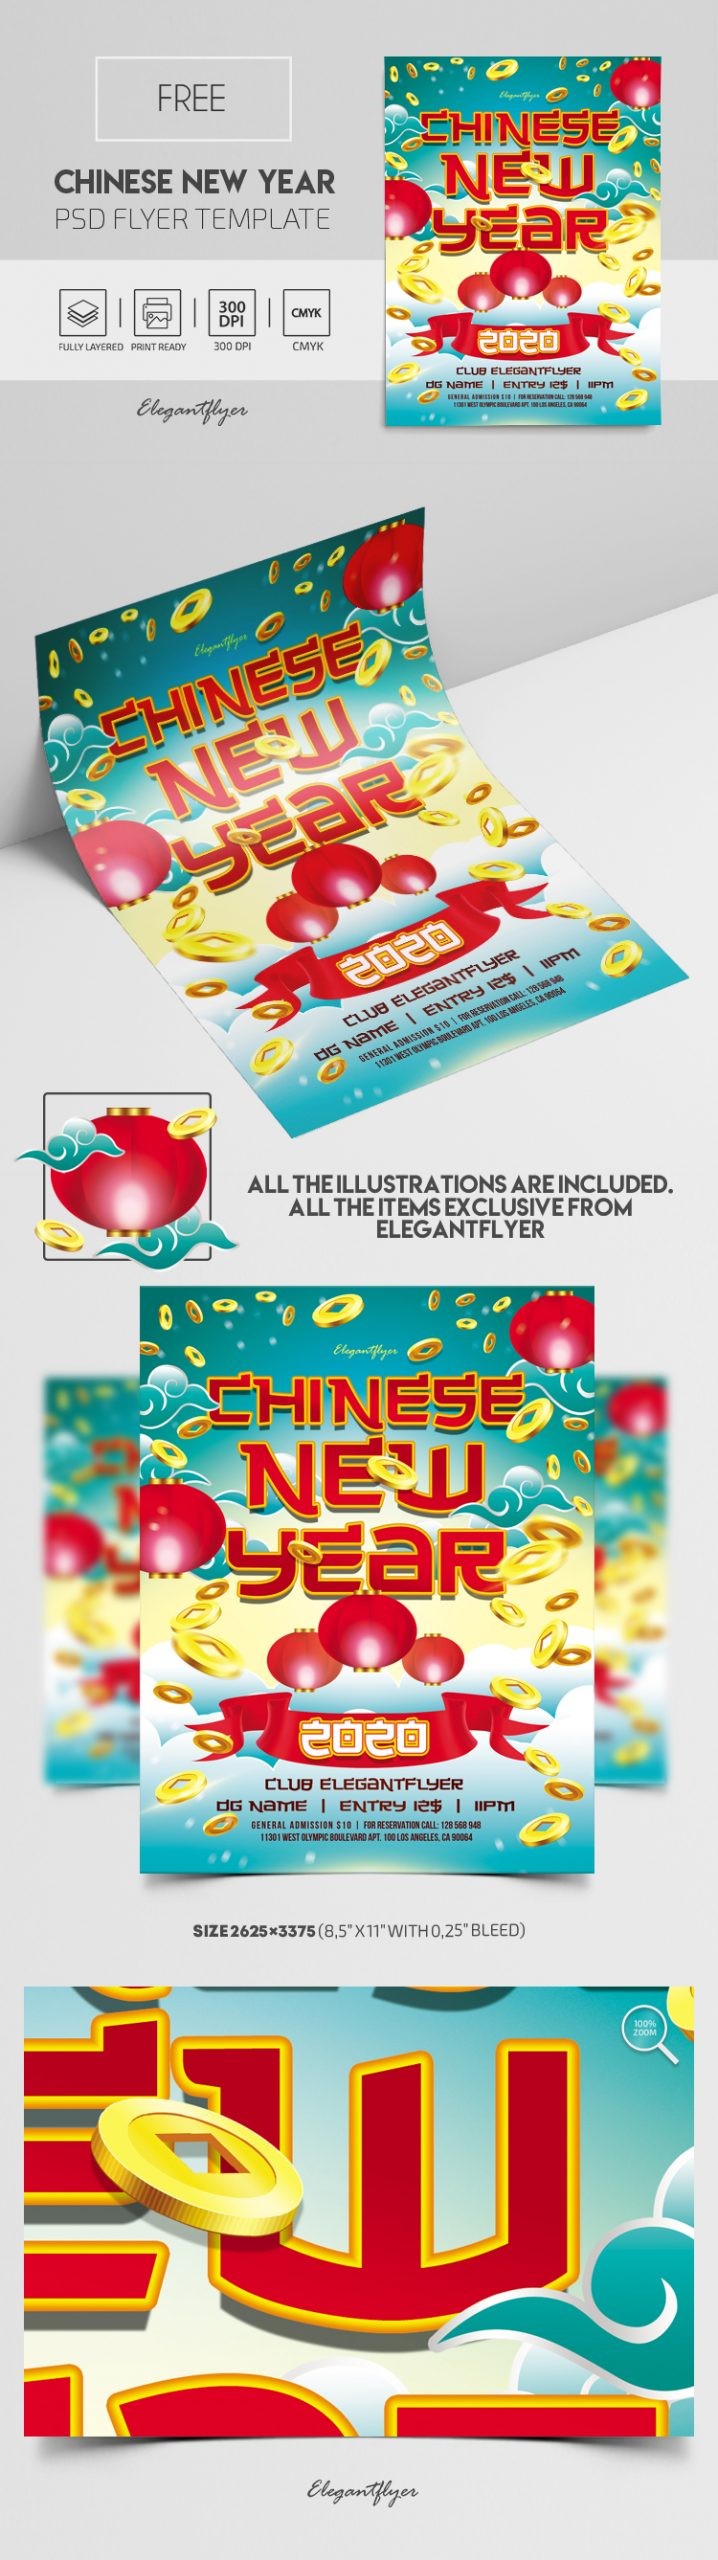 Año Nuevo Chino by ElegantFlyer